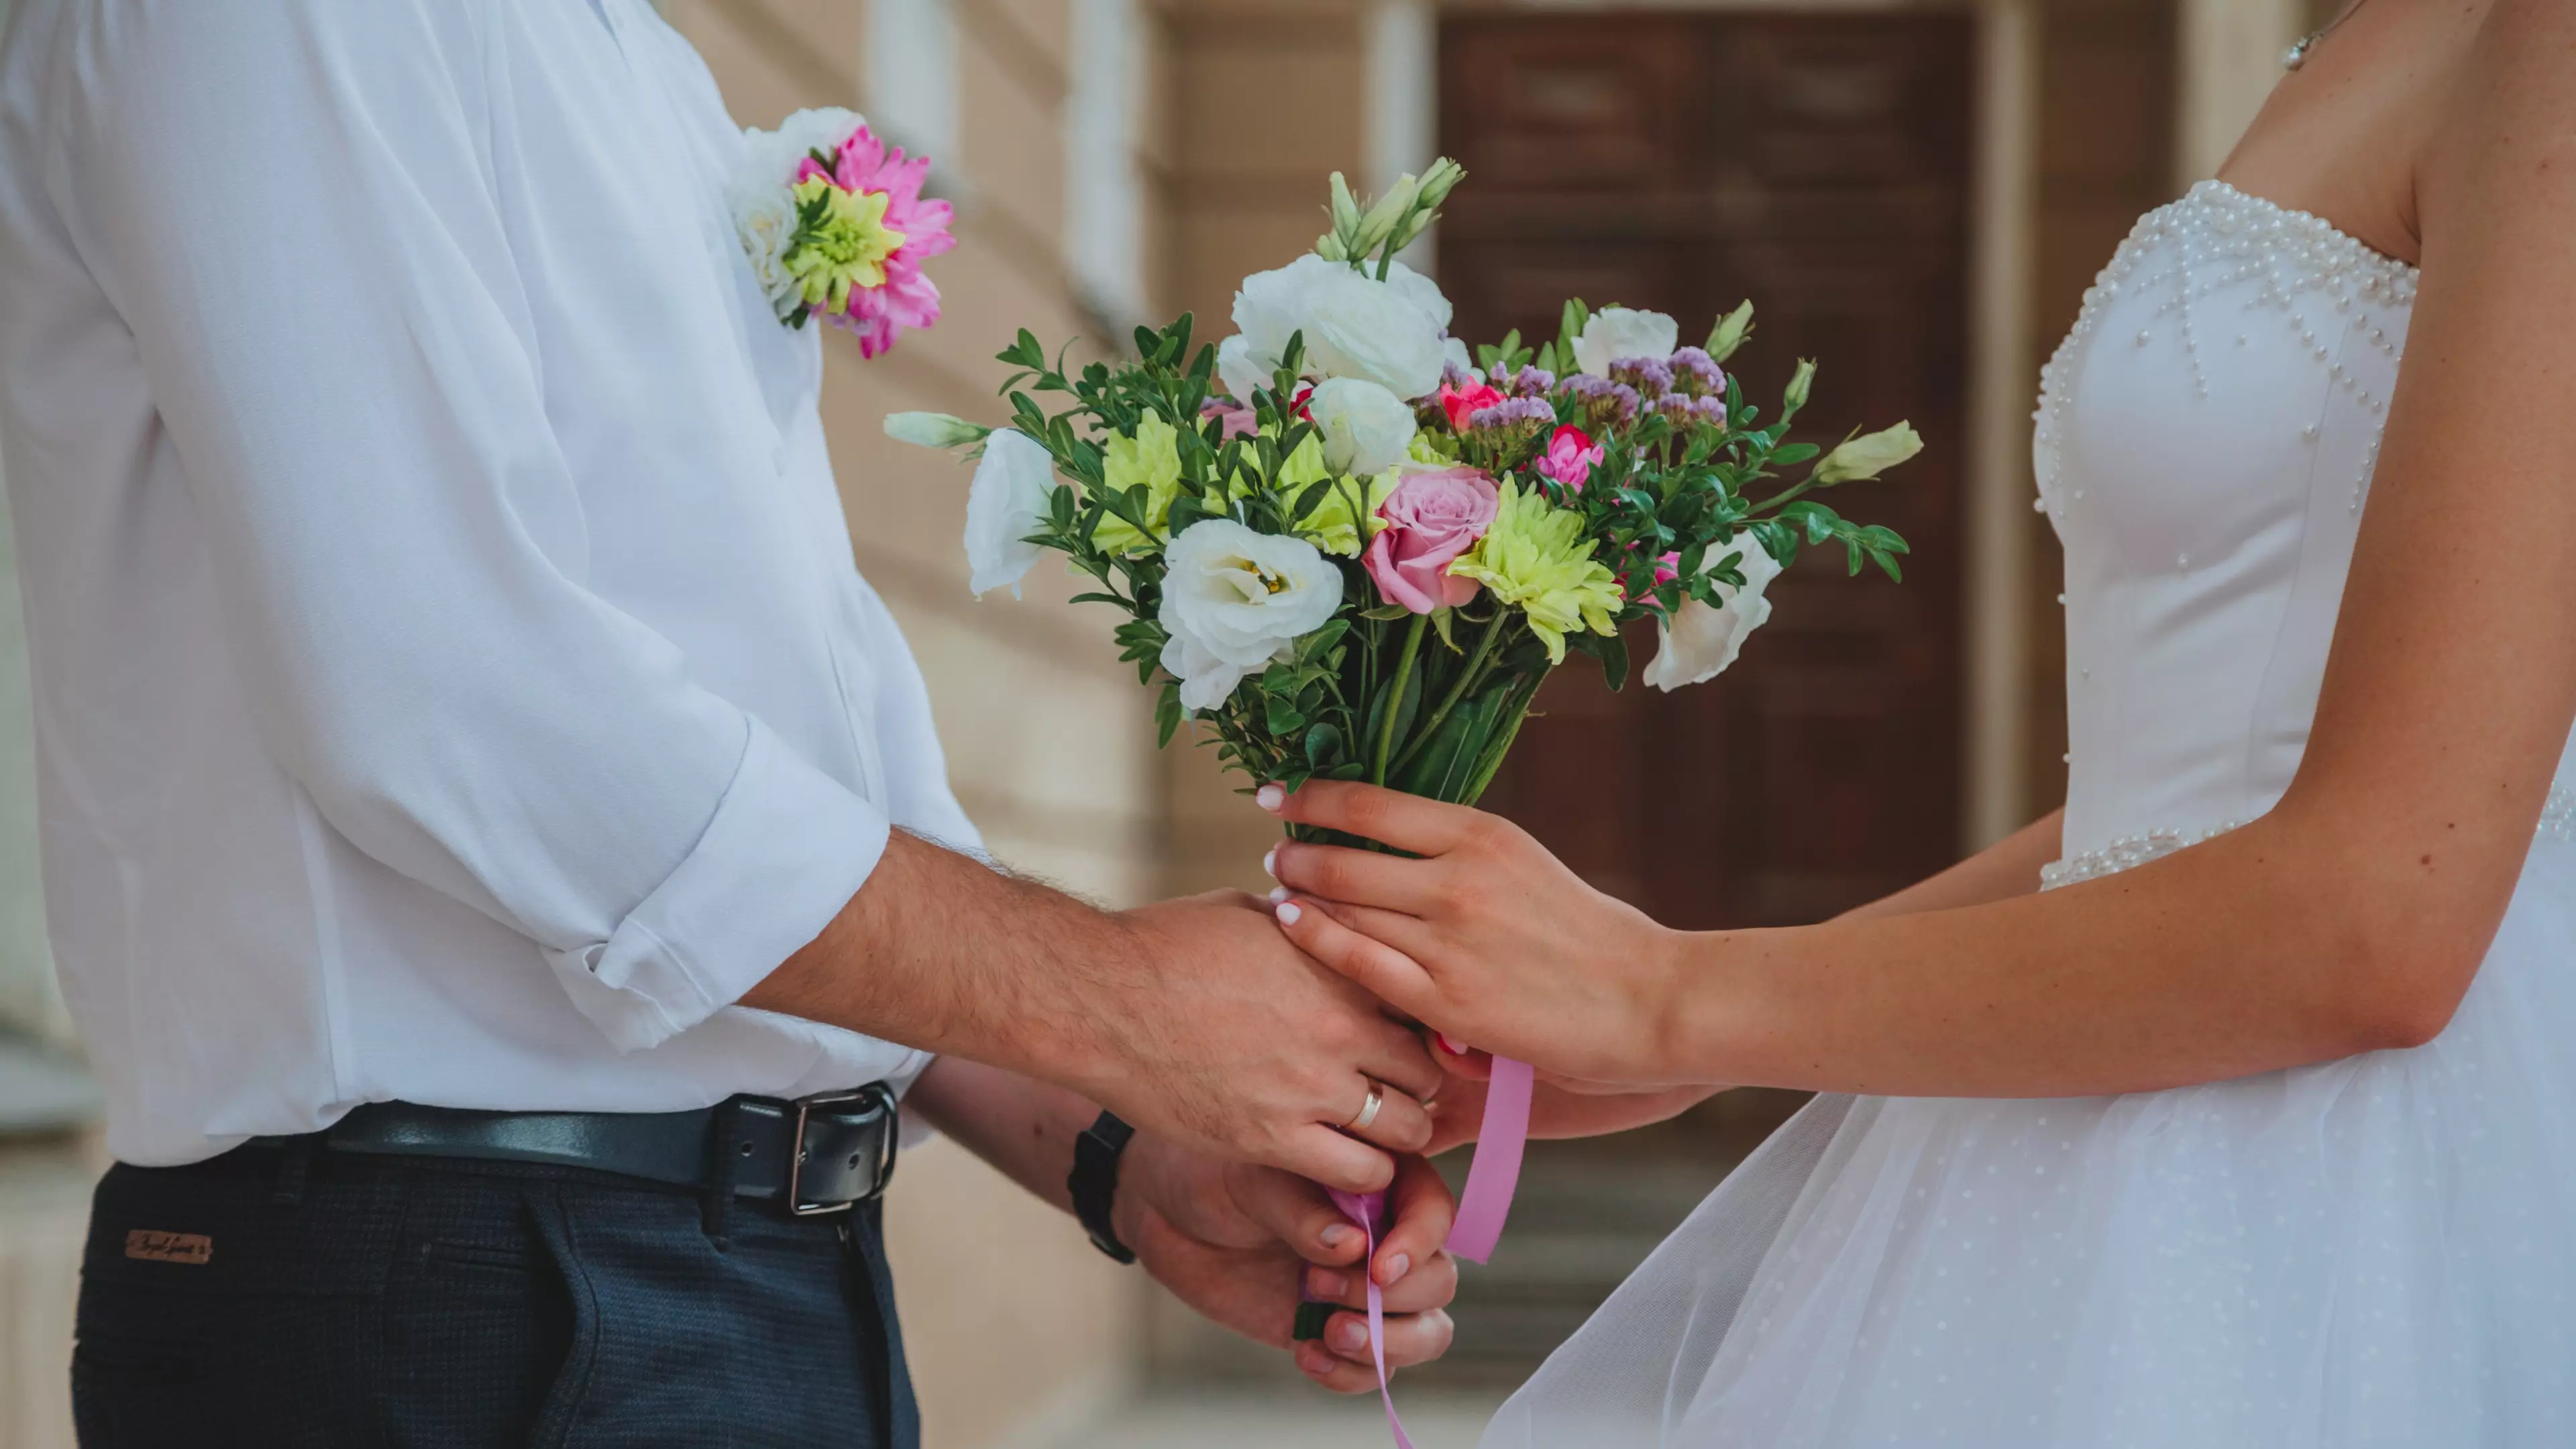 Man Explains His Girlfriend's Family's Bizarre Wedding Night Ritual